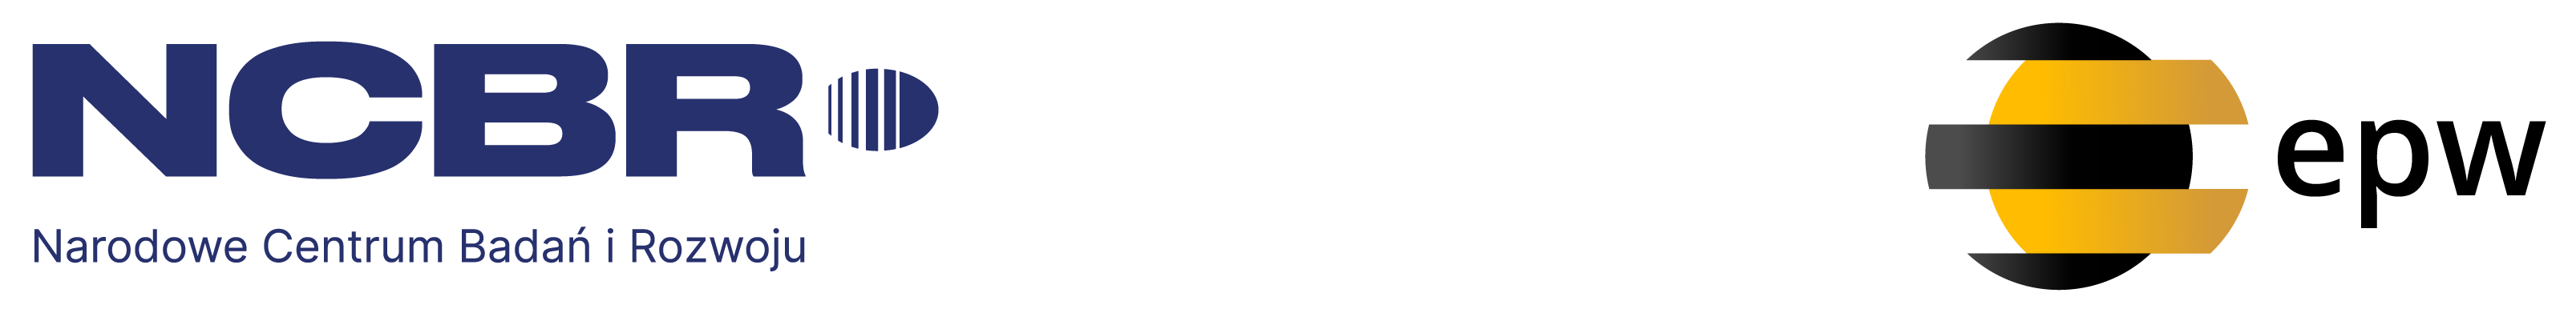 Logo NCBiR i logo projektu EPW